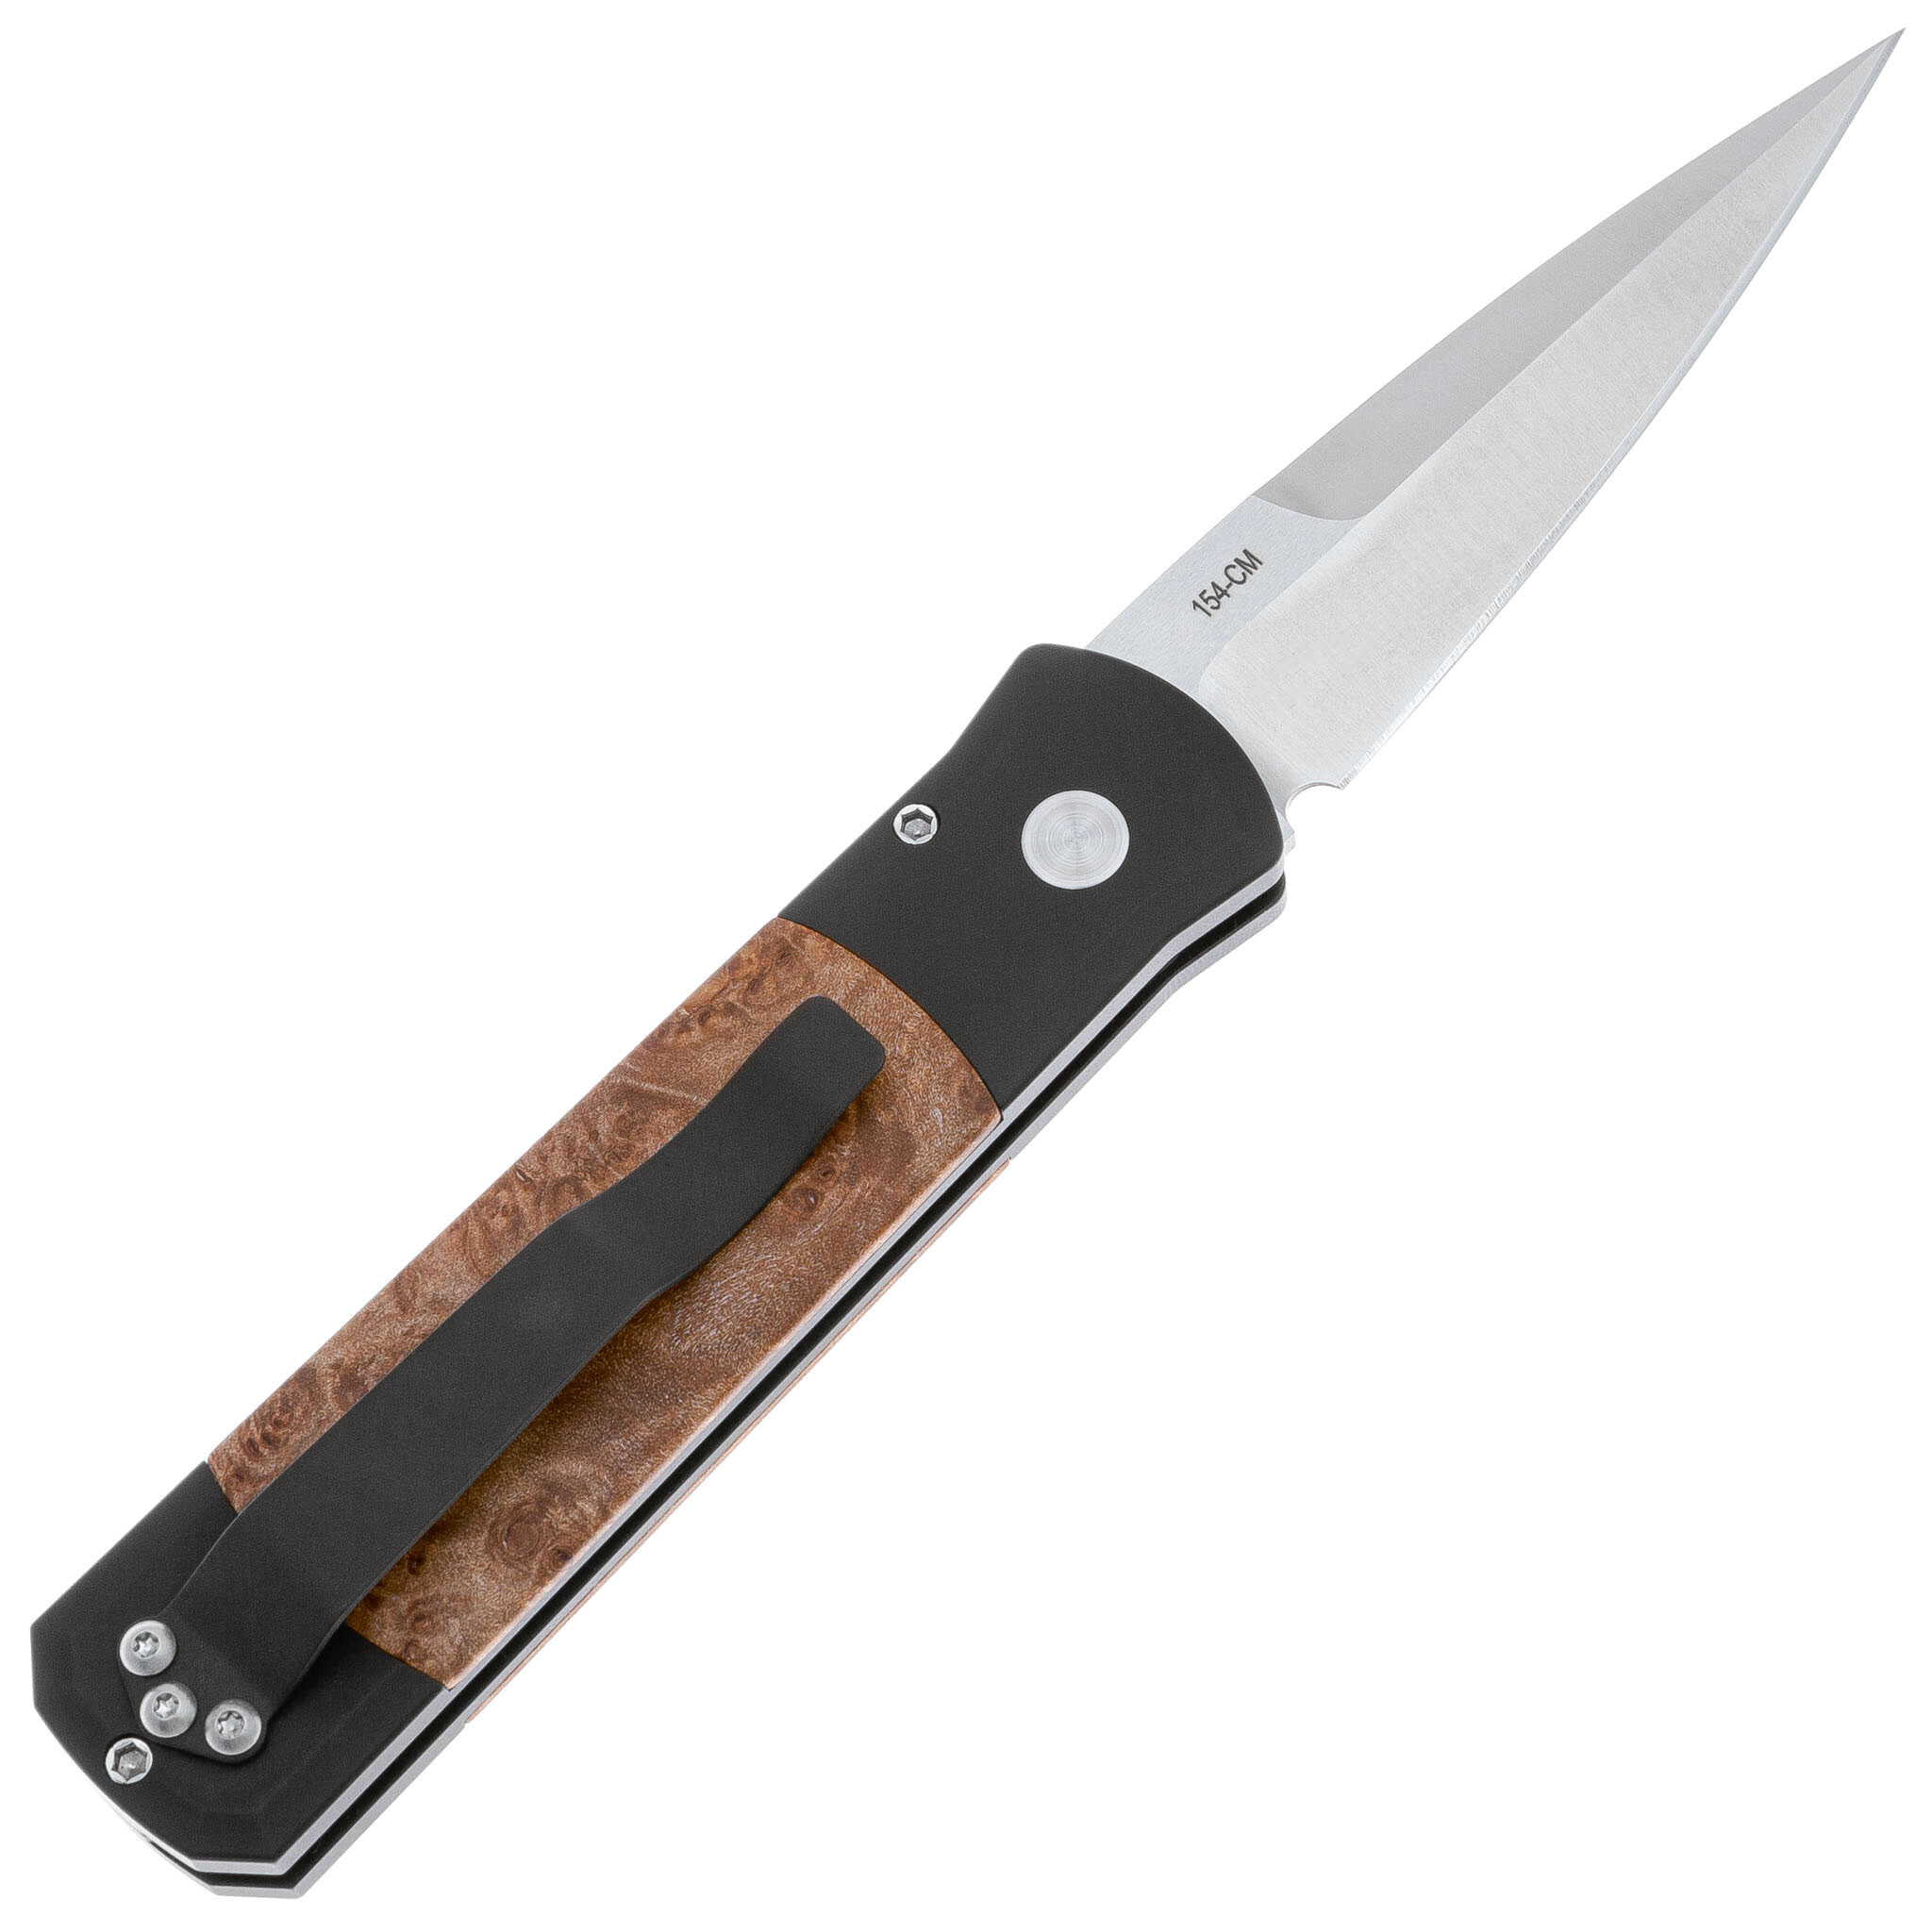 Складной нож Pro-Tech Godson 706, сталь 154CM, рукоять алюминий/кость - фото 2